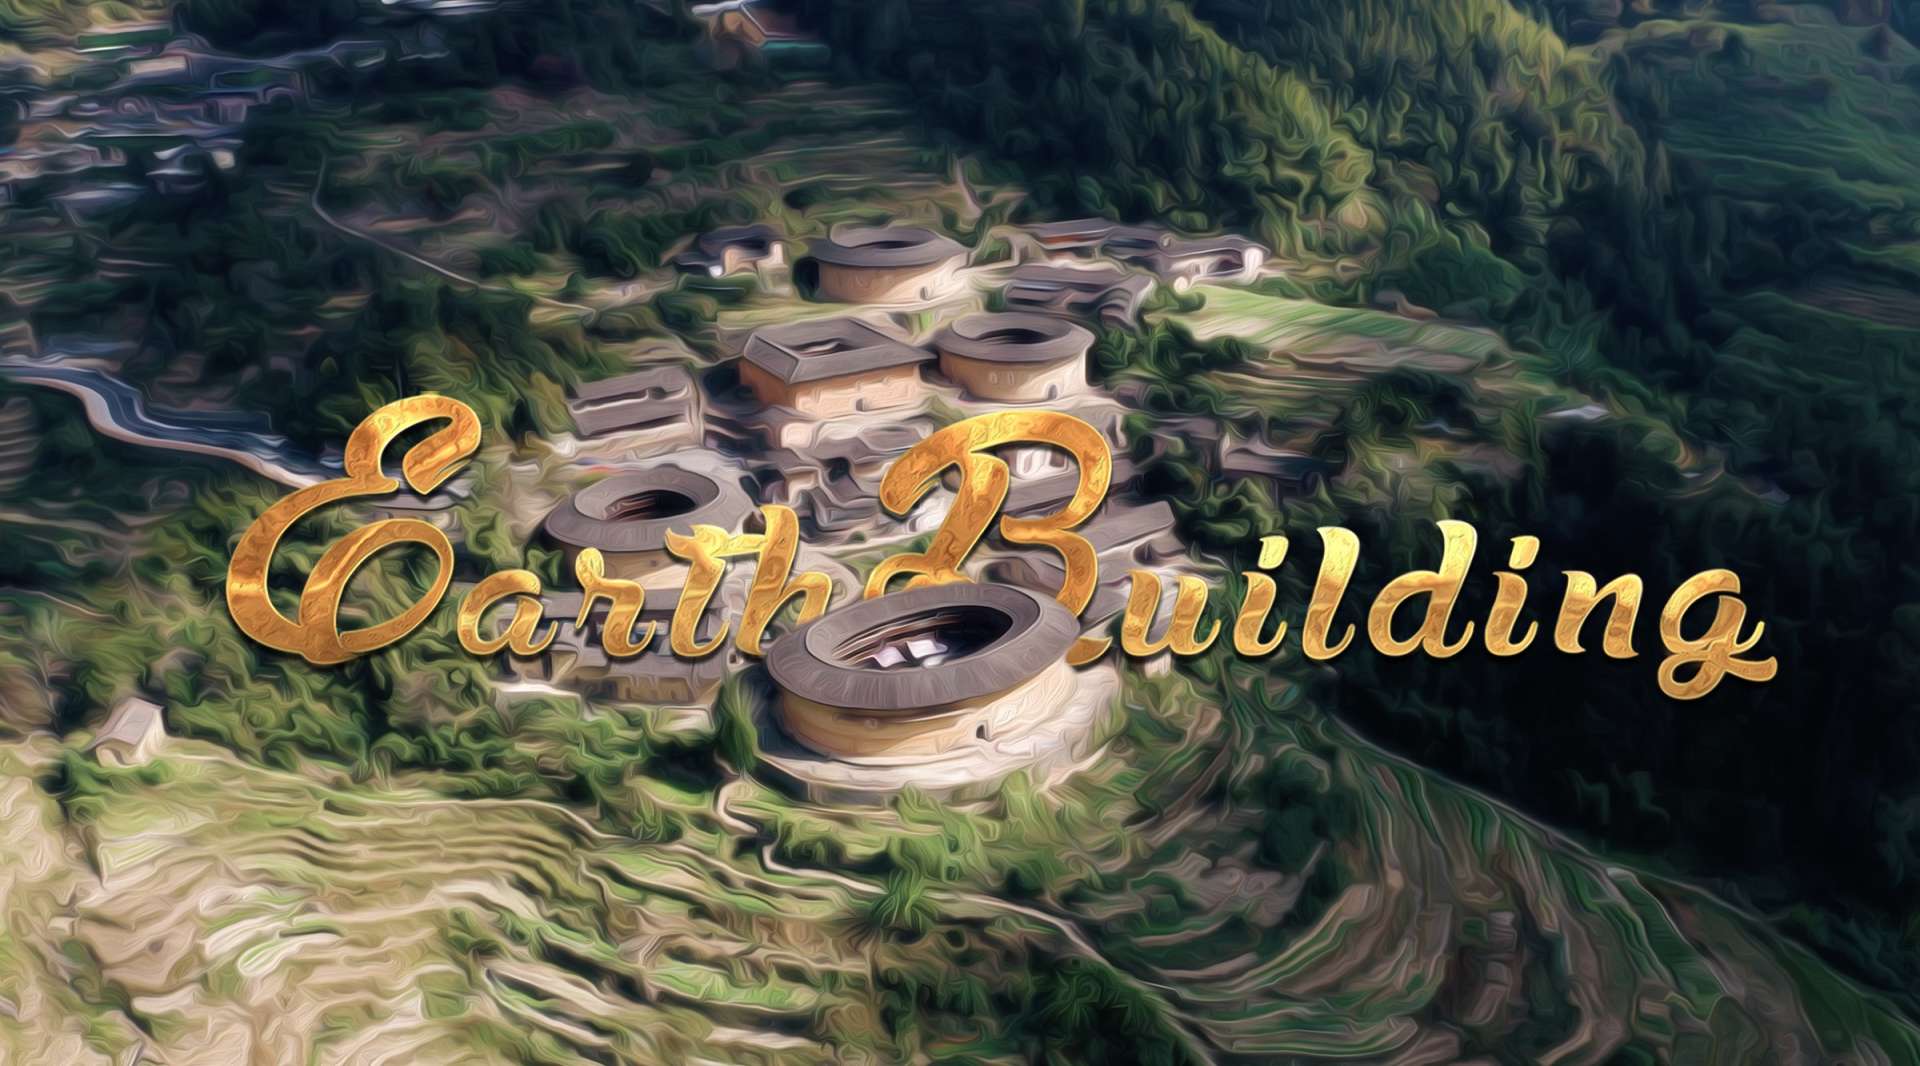 【EARTH BUILDING】福建土楼旅行短片—客家人的记忆